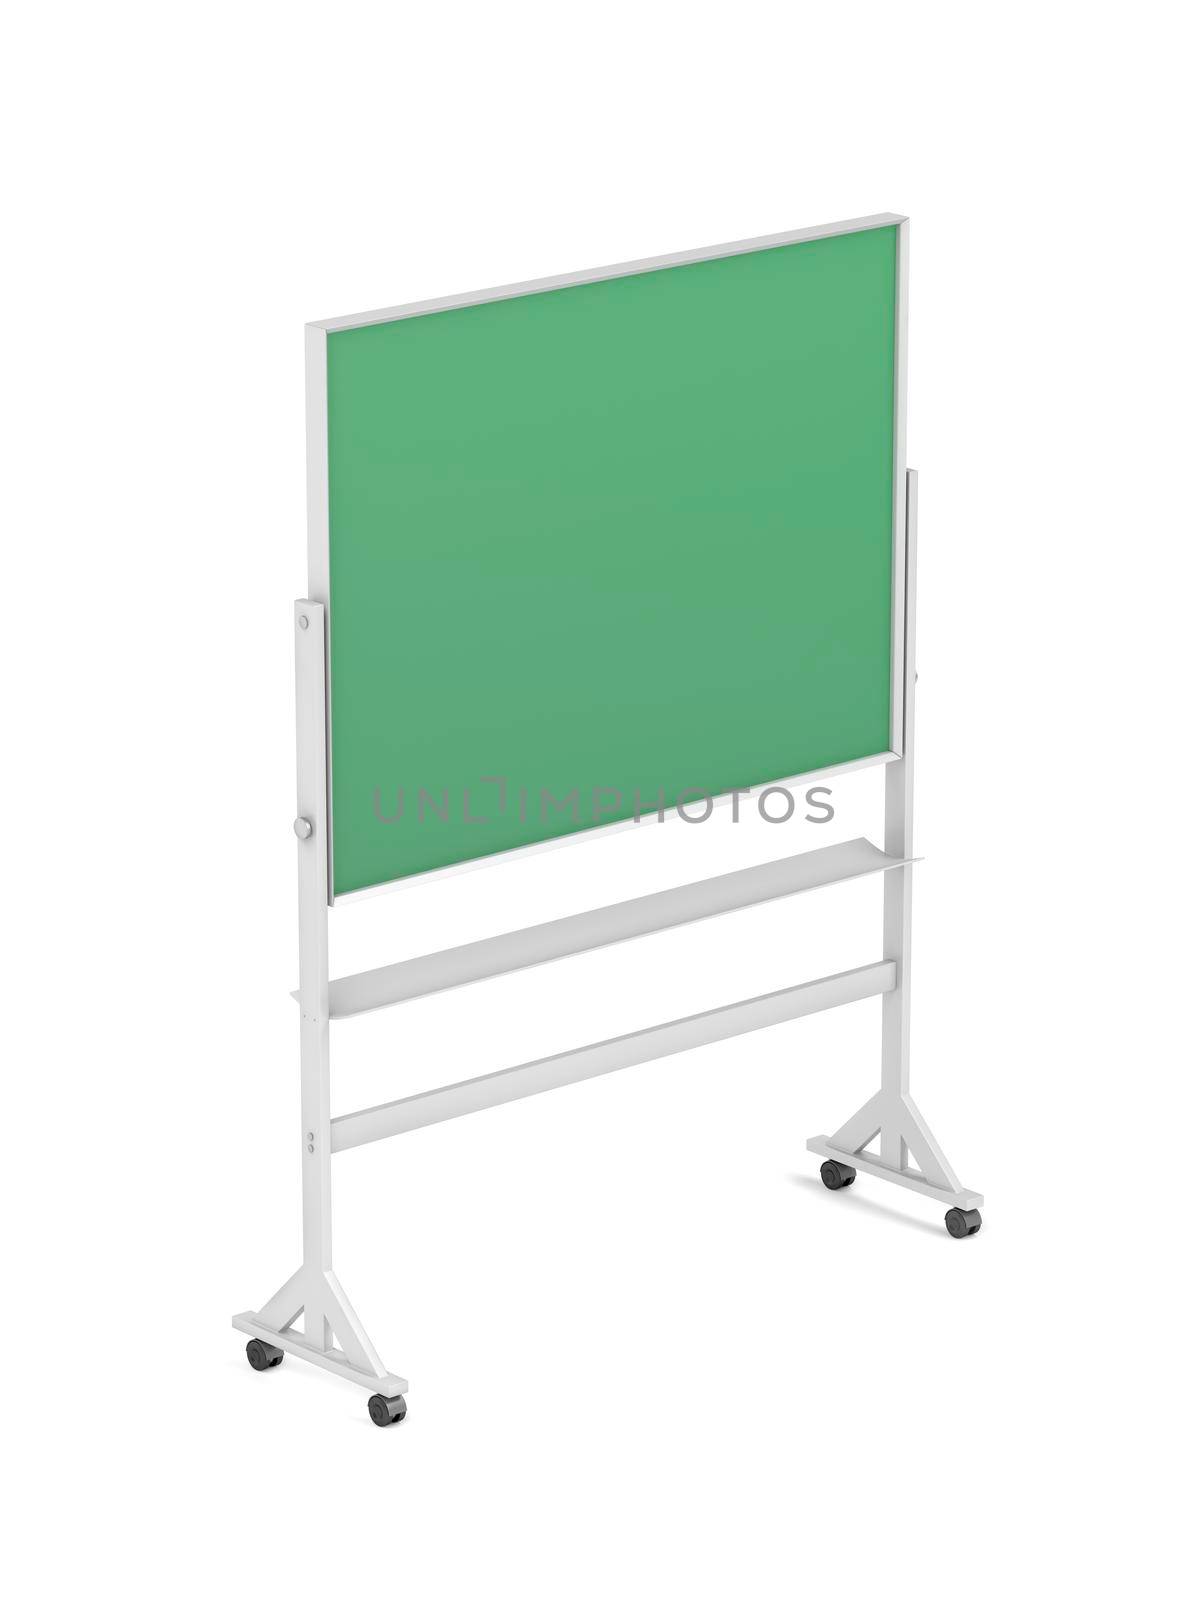 Mobile green chalkboard on white background